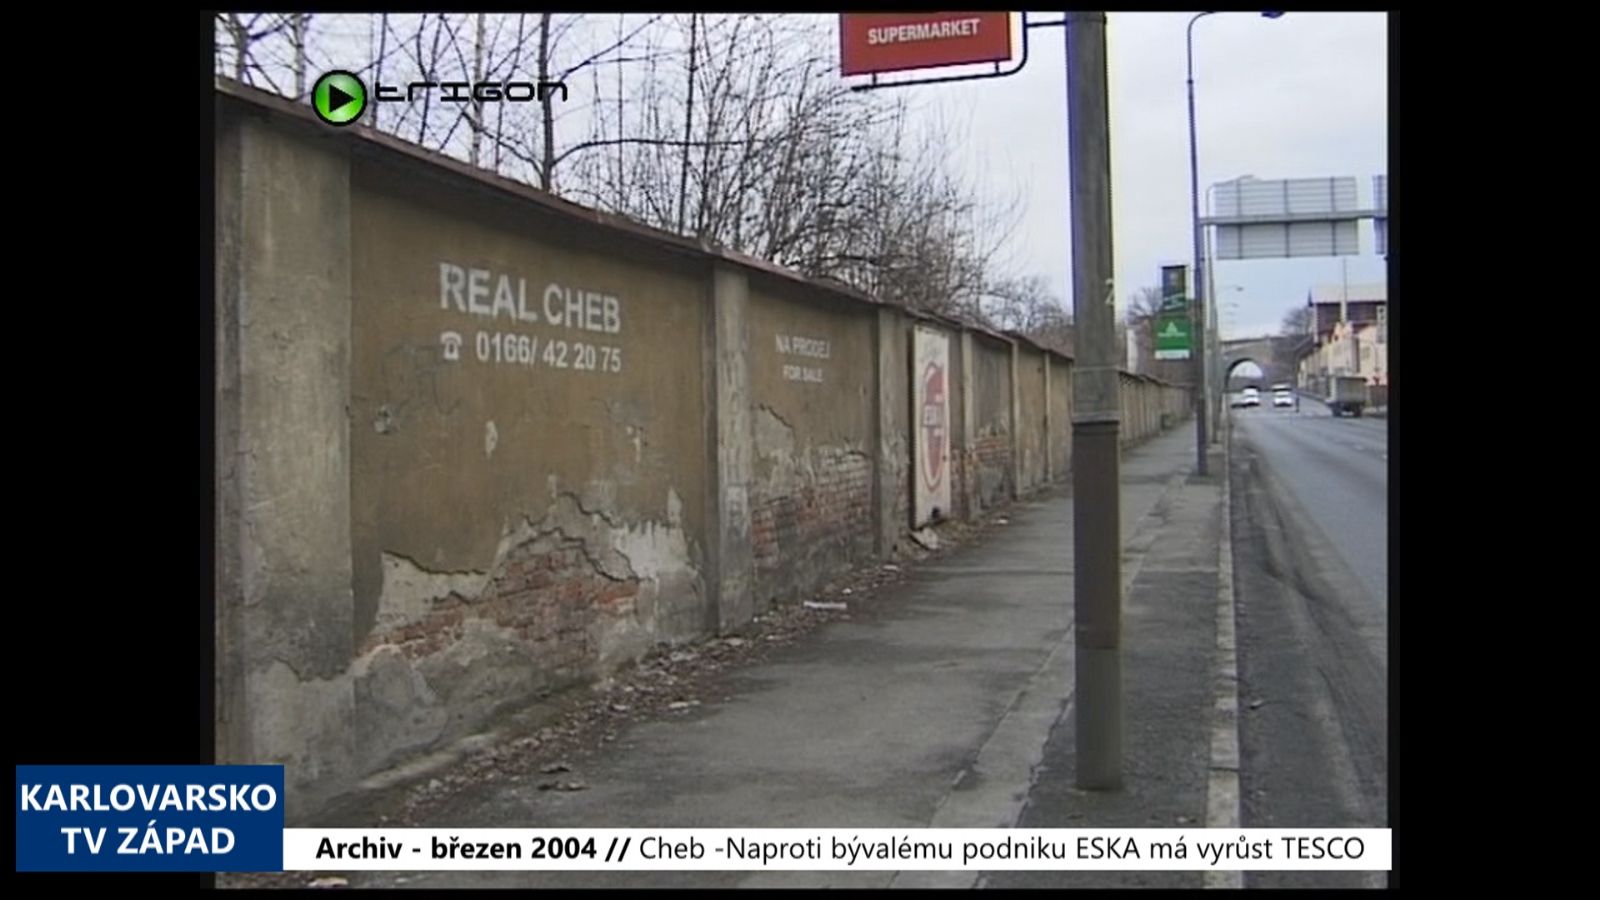 2004 – Cheb: Naproti bývalému podniku ESKA má vyrůst TESCO (TV Západ)